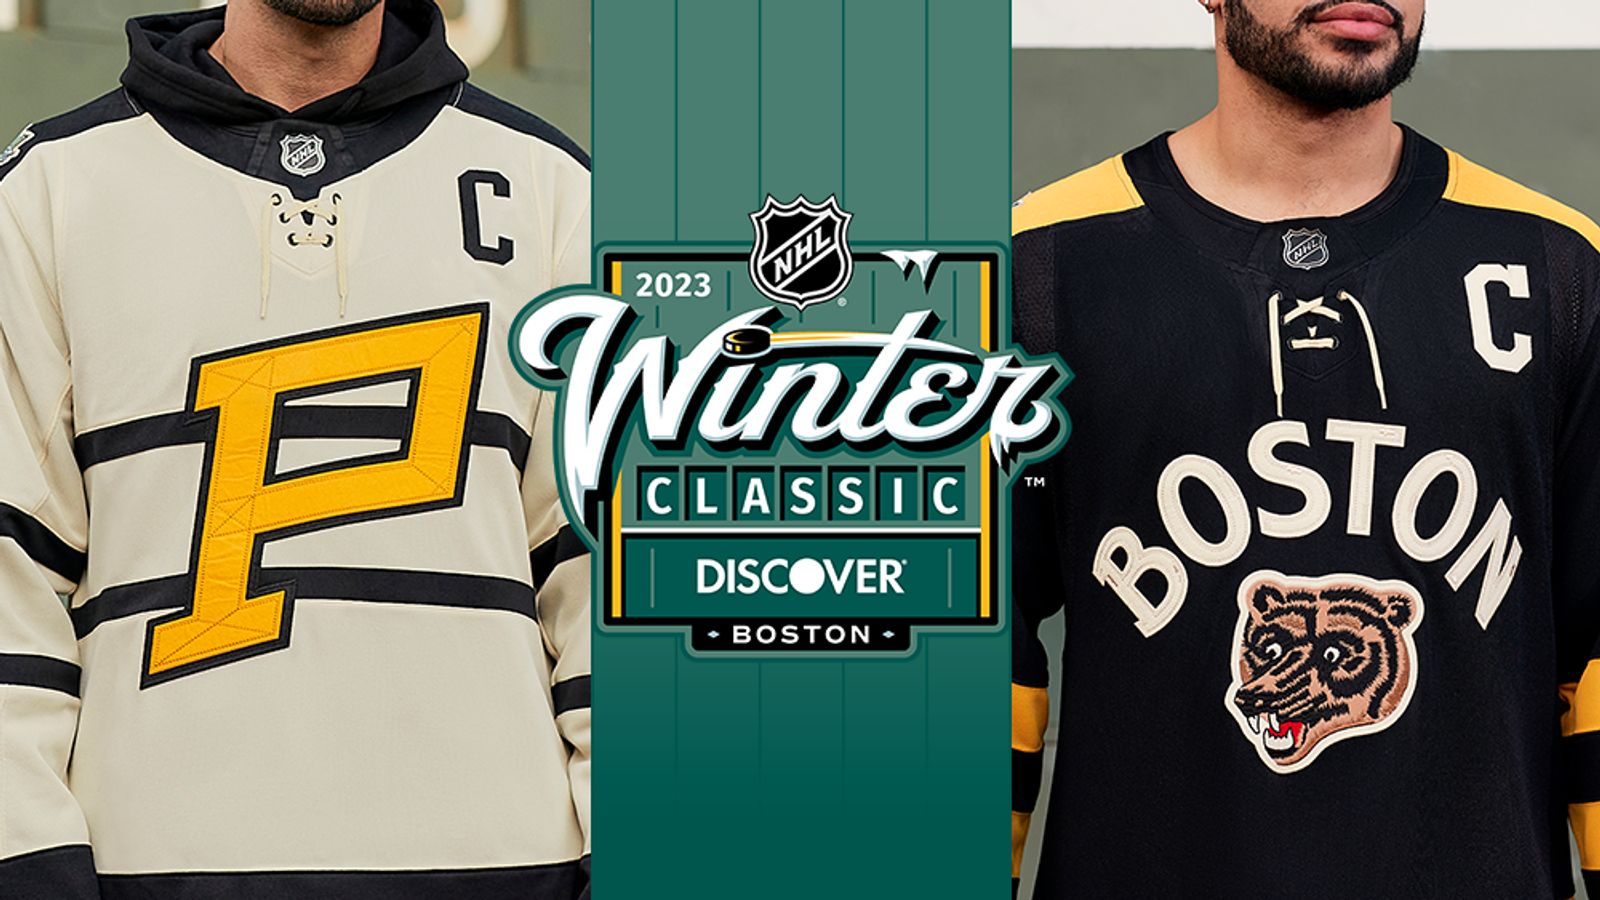 Bruins & Penguins Winter Classic Jerseys Revealed! 